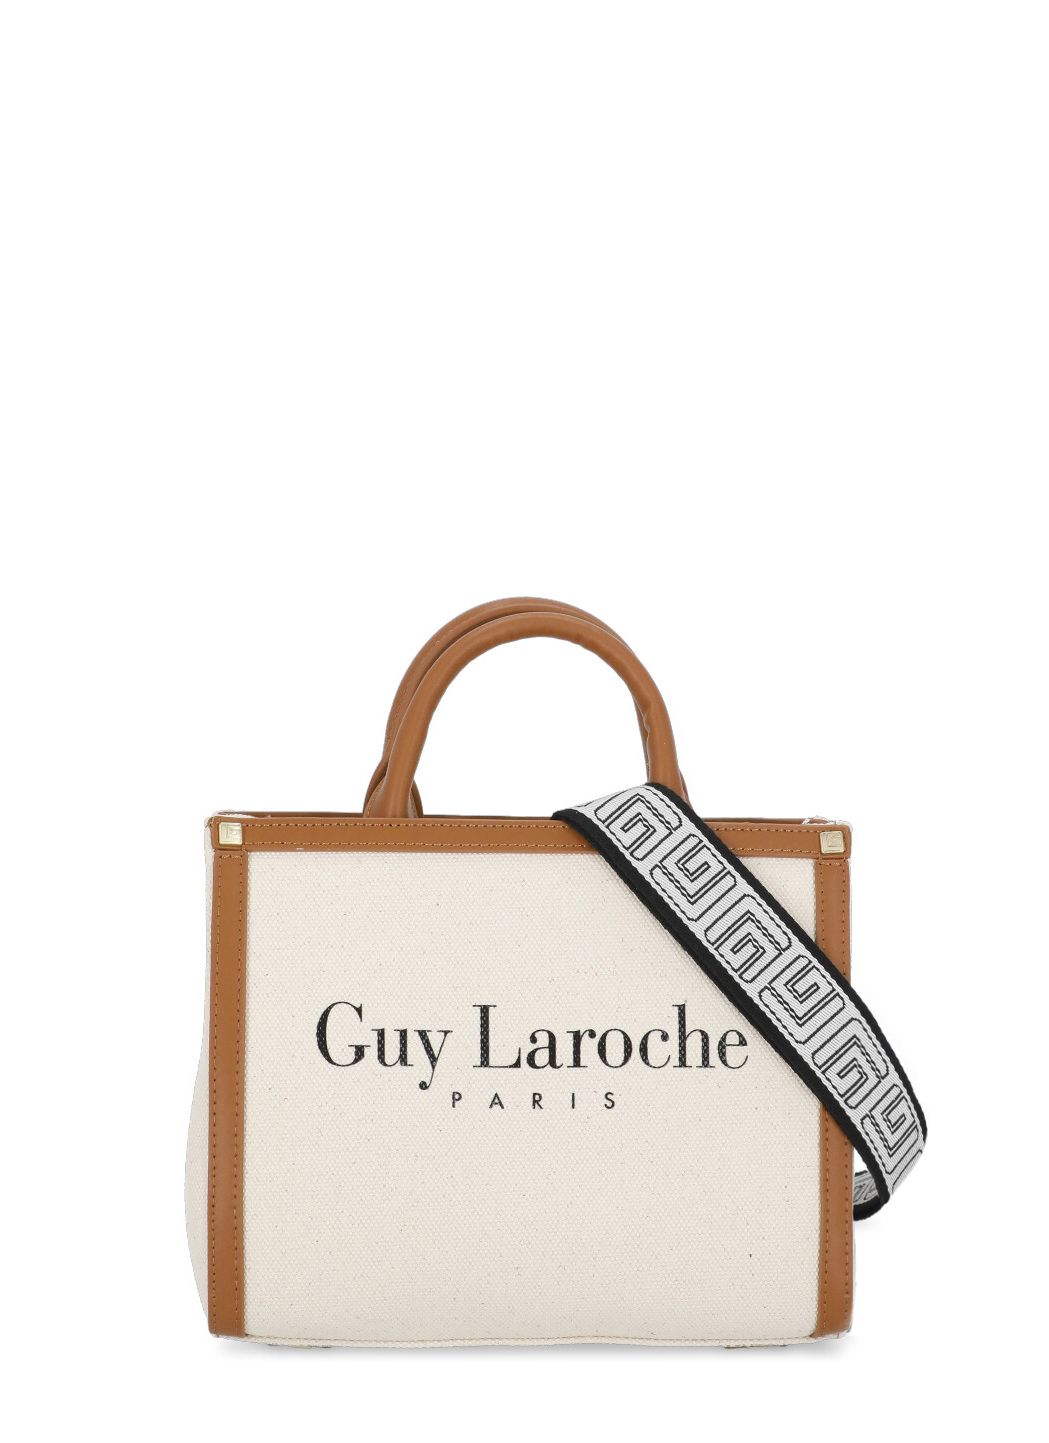 Guy Laroche Small Bag In Tan